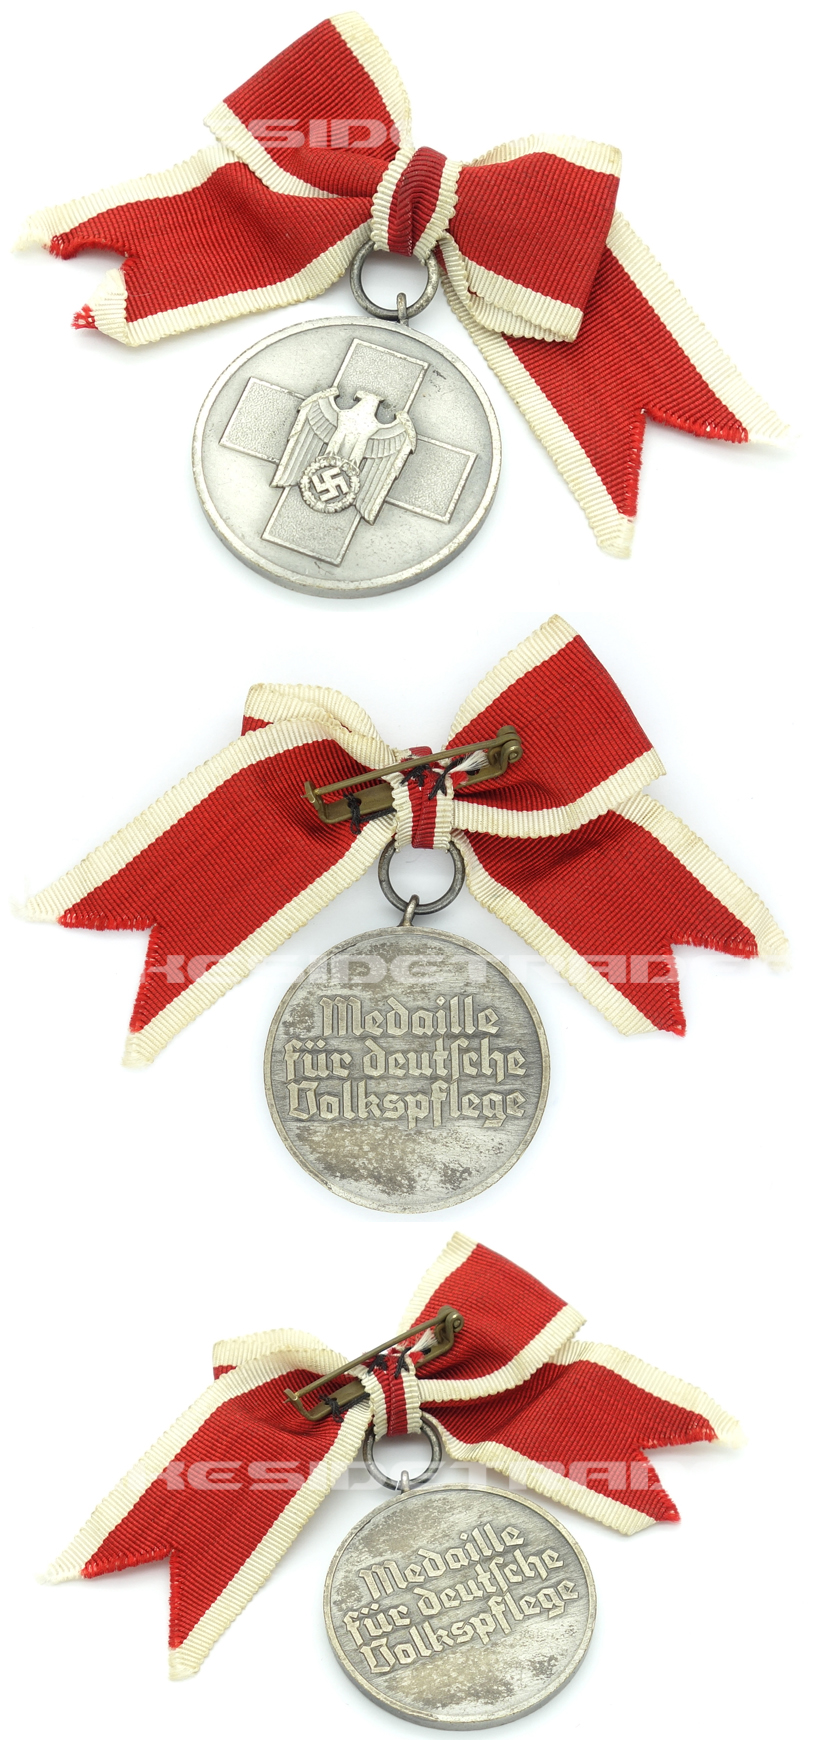 4th Class Social Welfare Medal on Female's Ribbon Bow